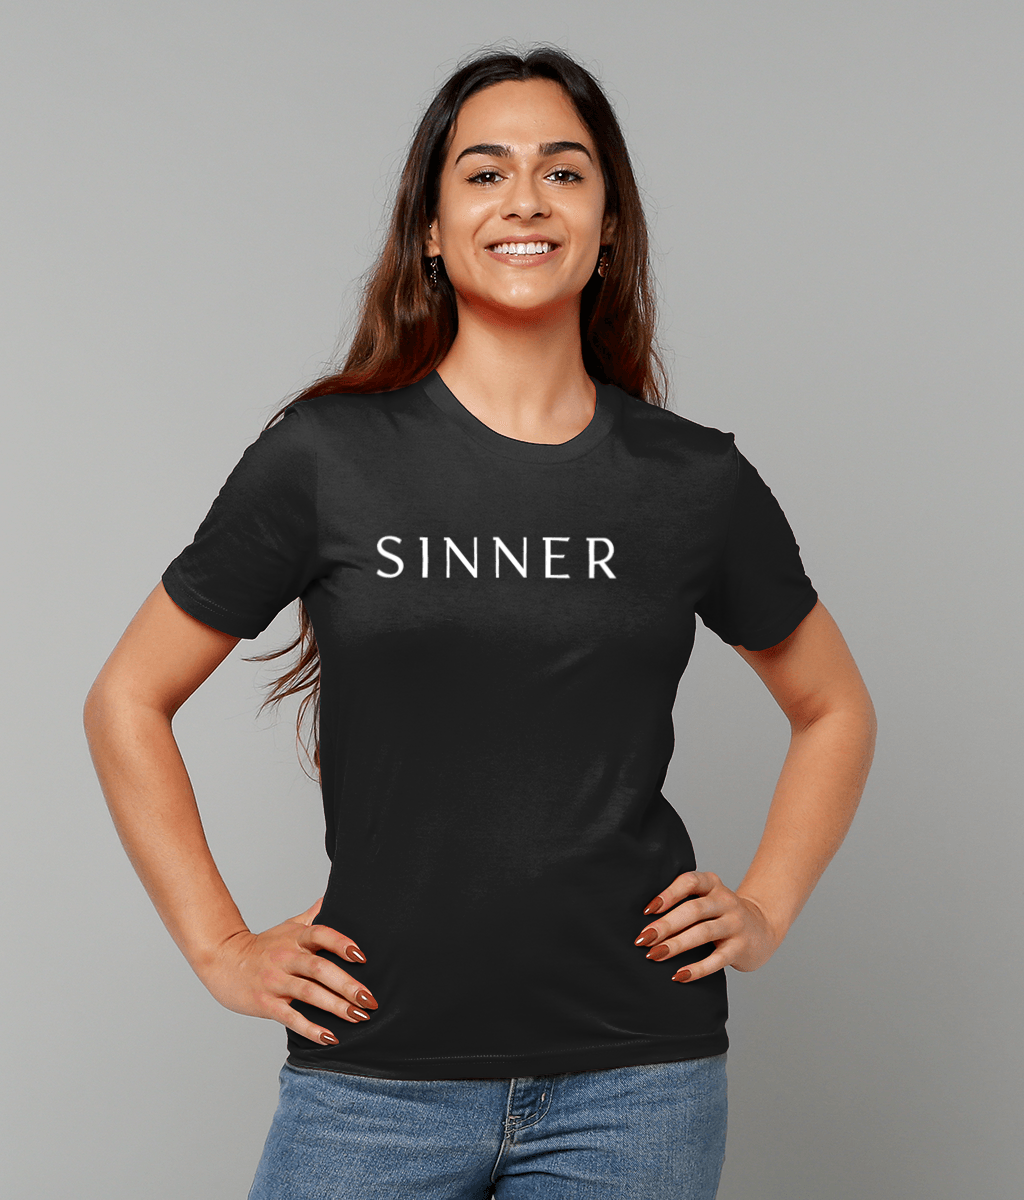 T-shirt For Sinners